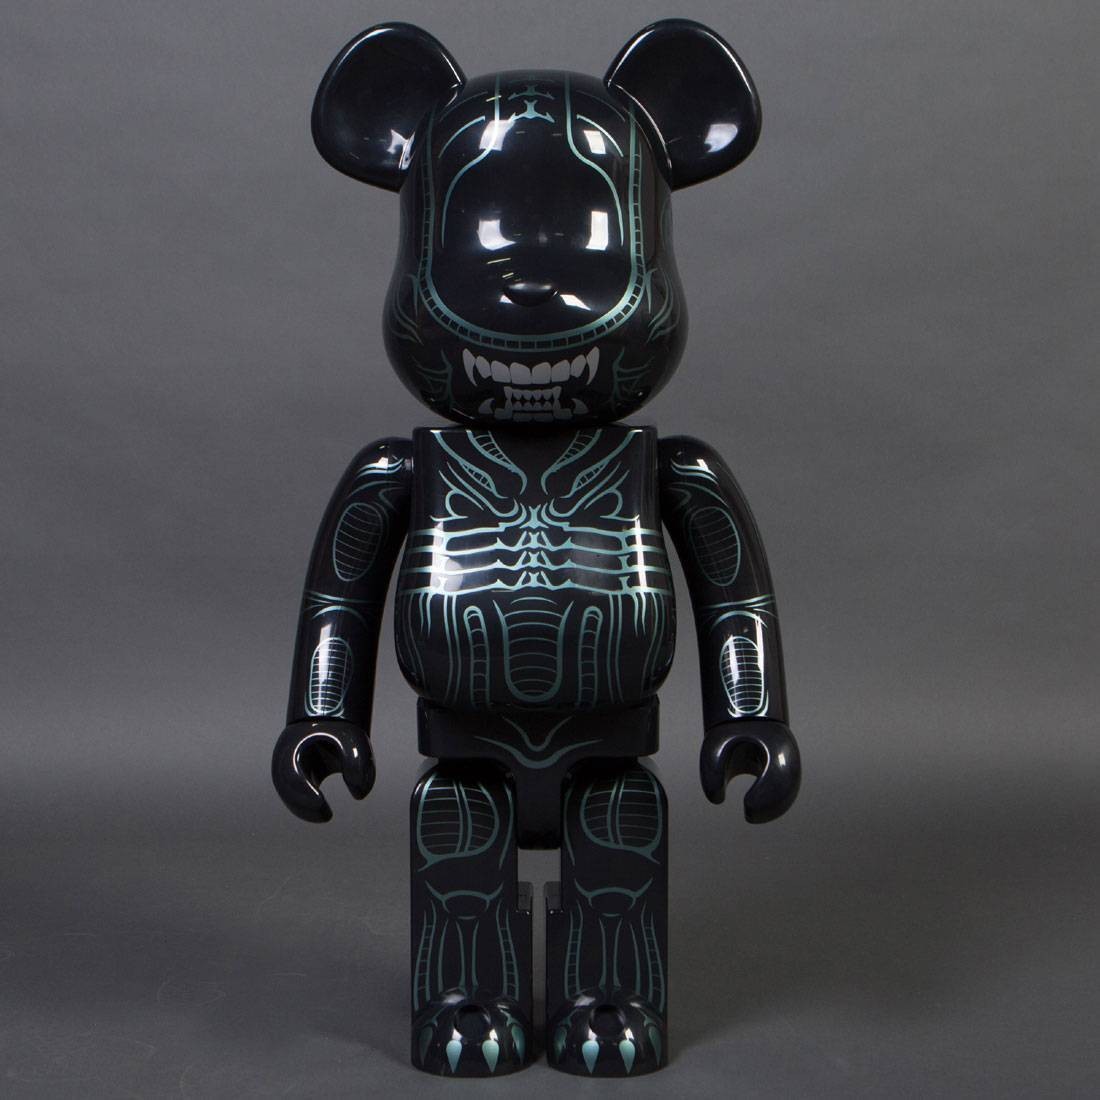 Medicom Aliens Warrior Alien 1000% Bearbrick Figure (black)